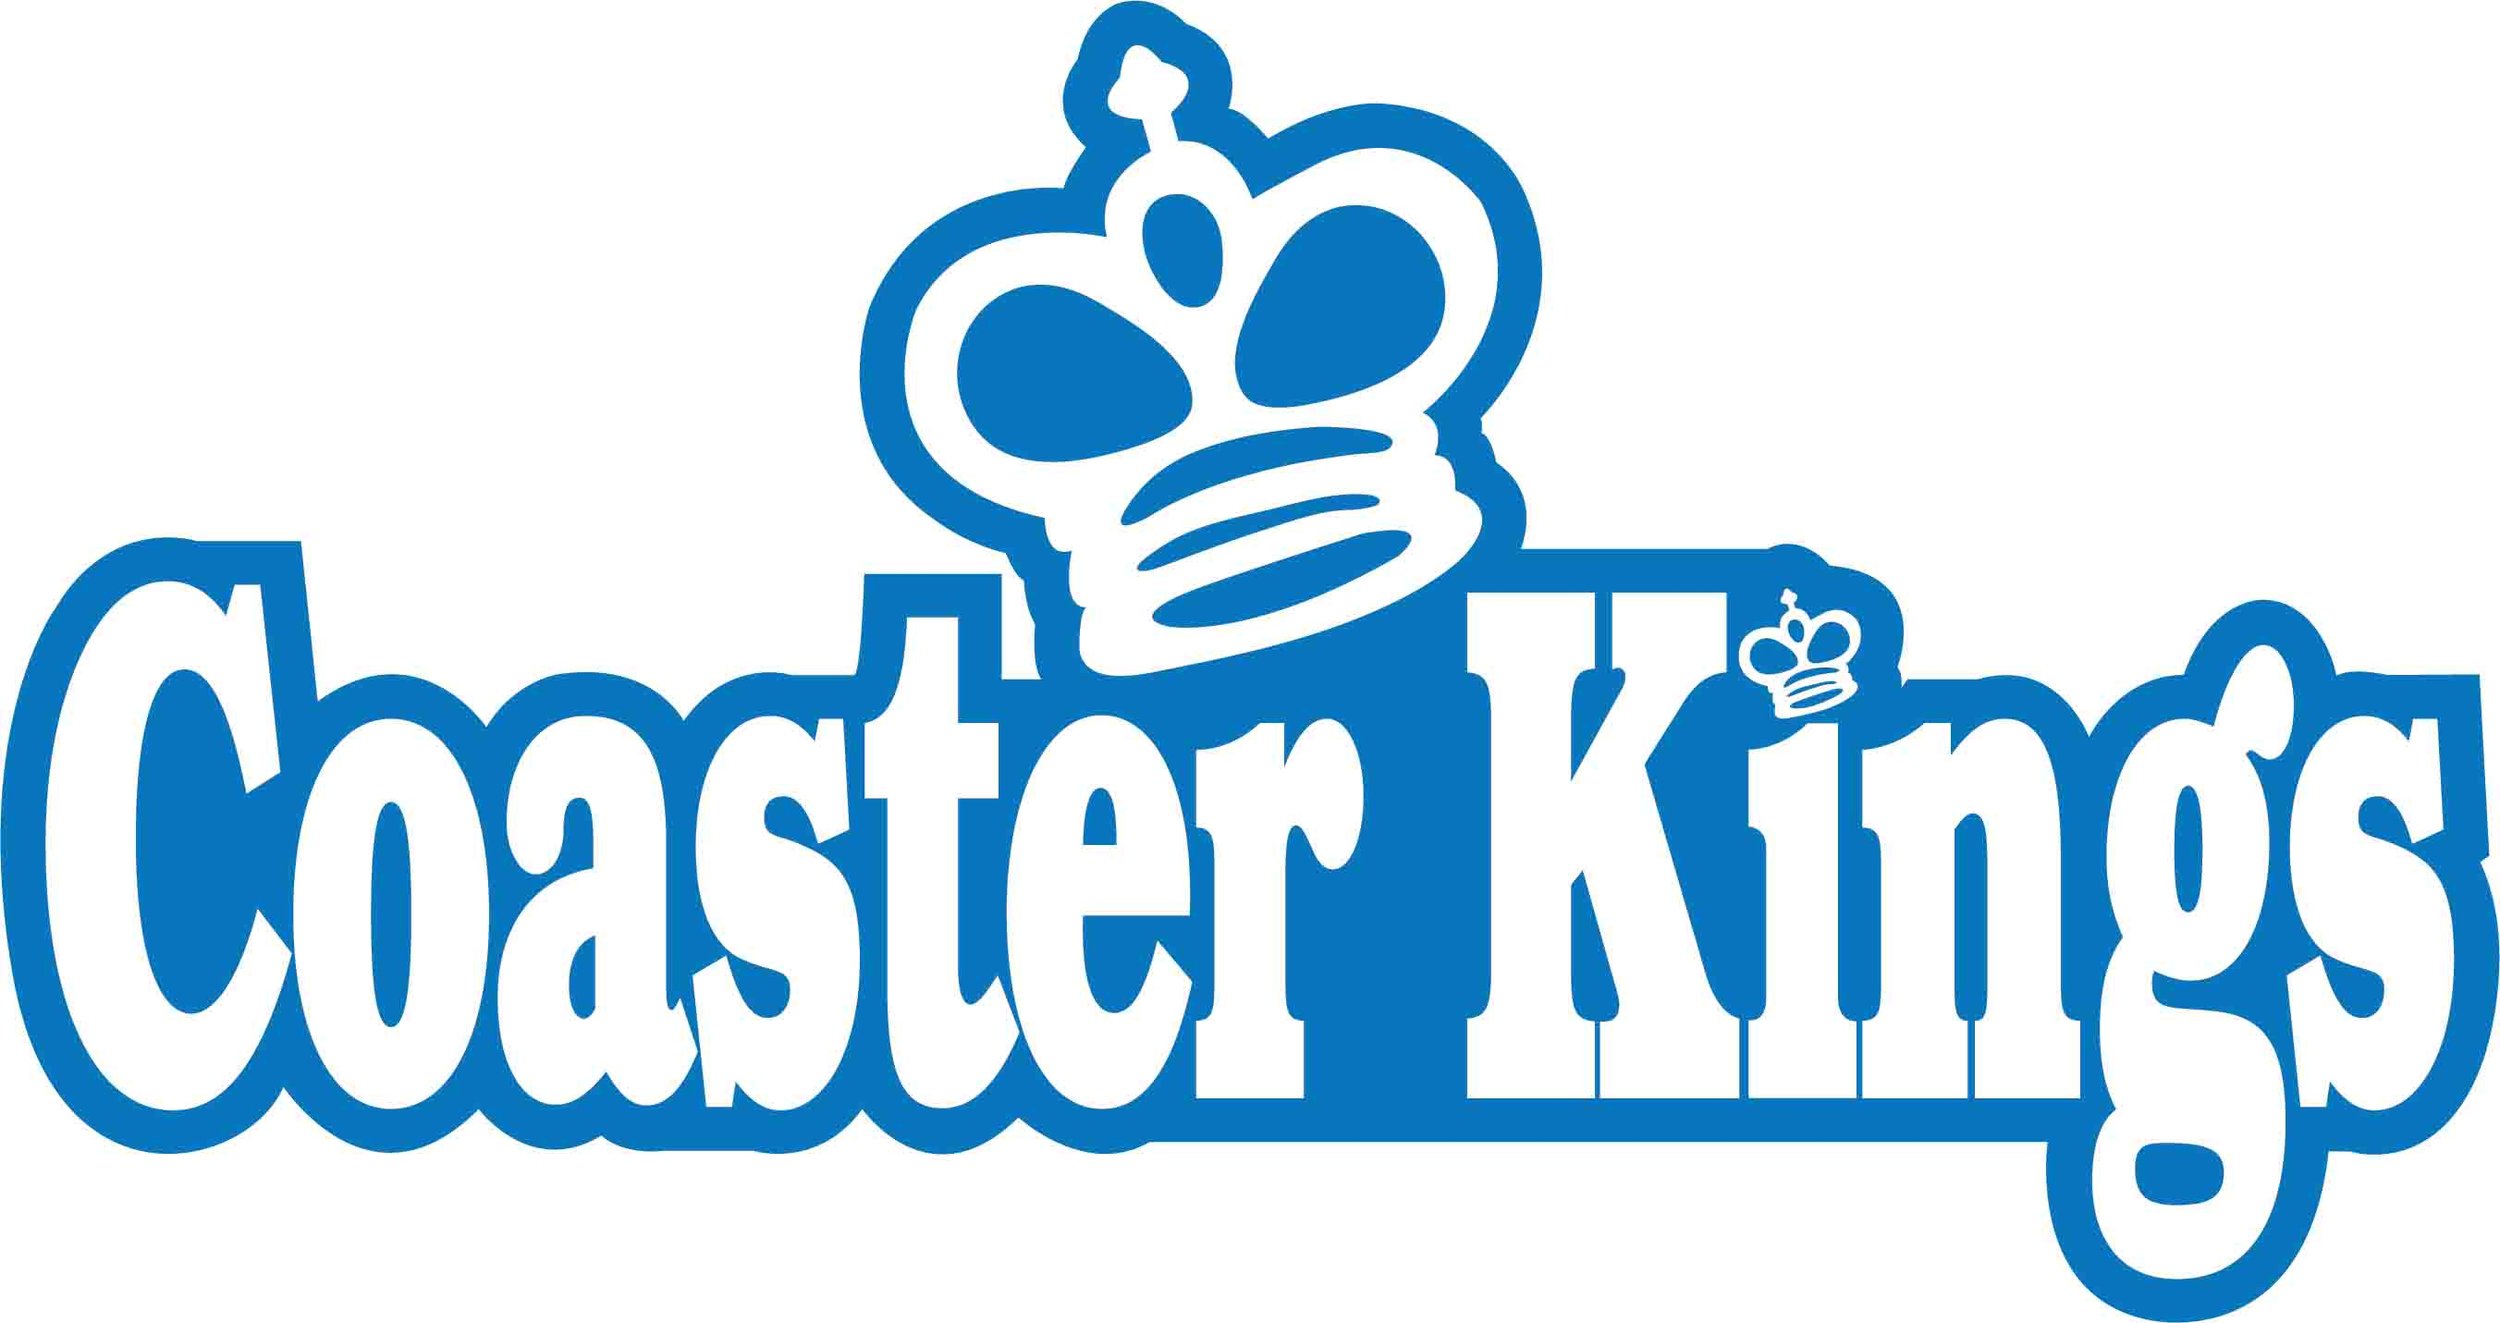 coaster-kings-logo.jpg